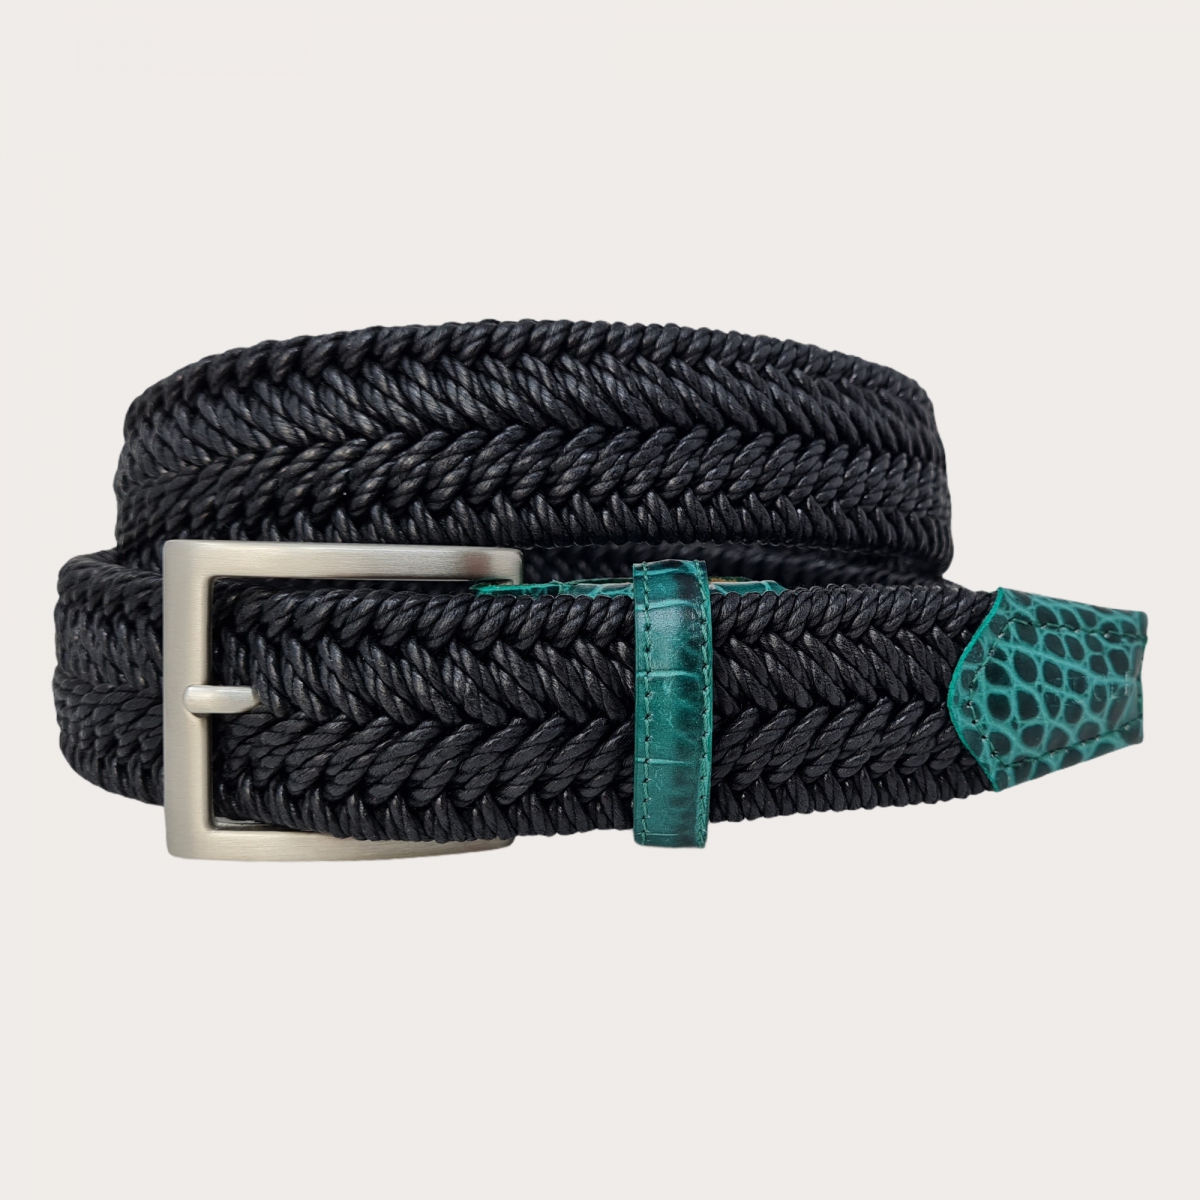 Brucle braided elastic belt in black and green